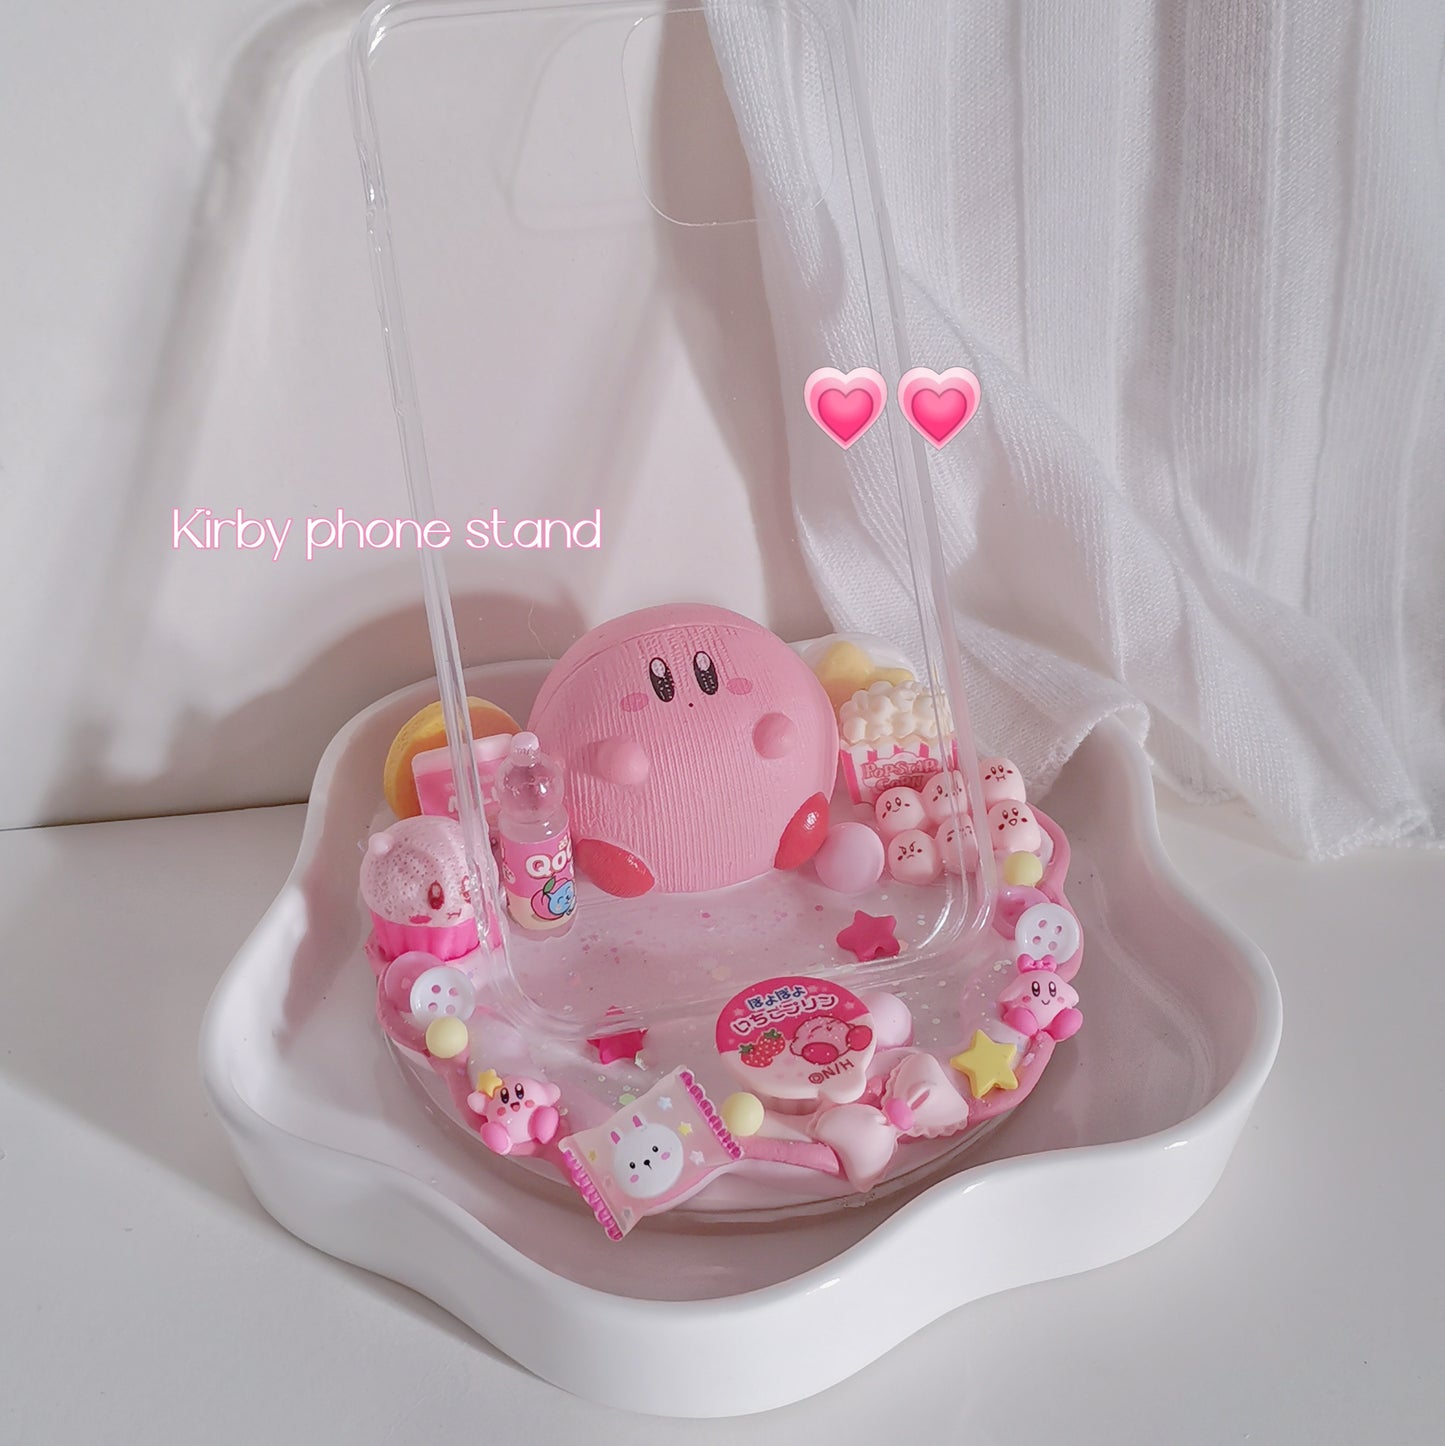 Kirby phone stand